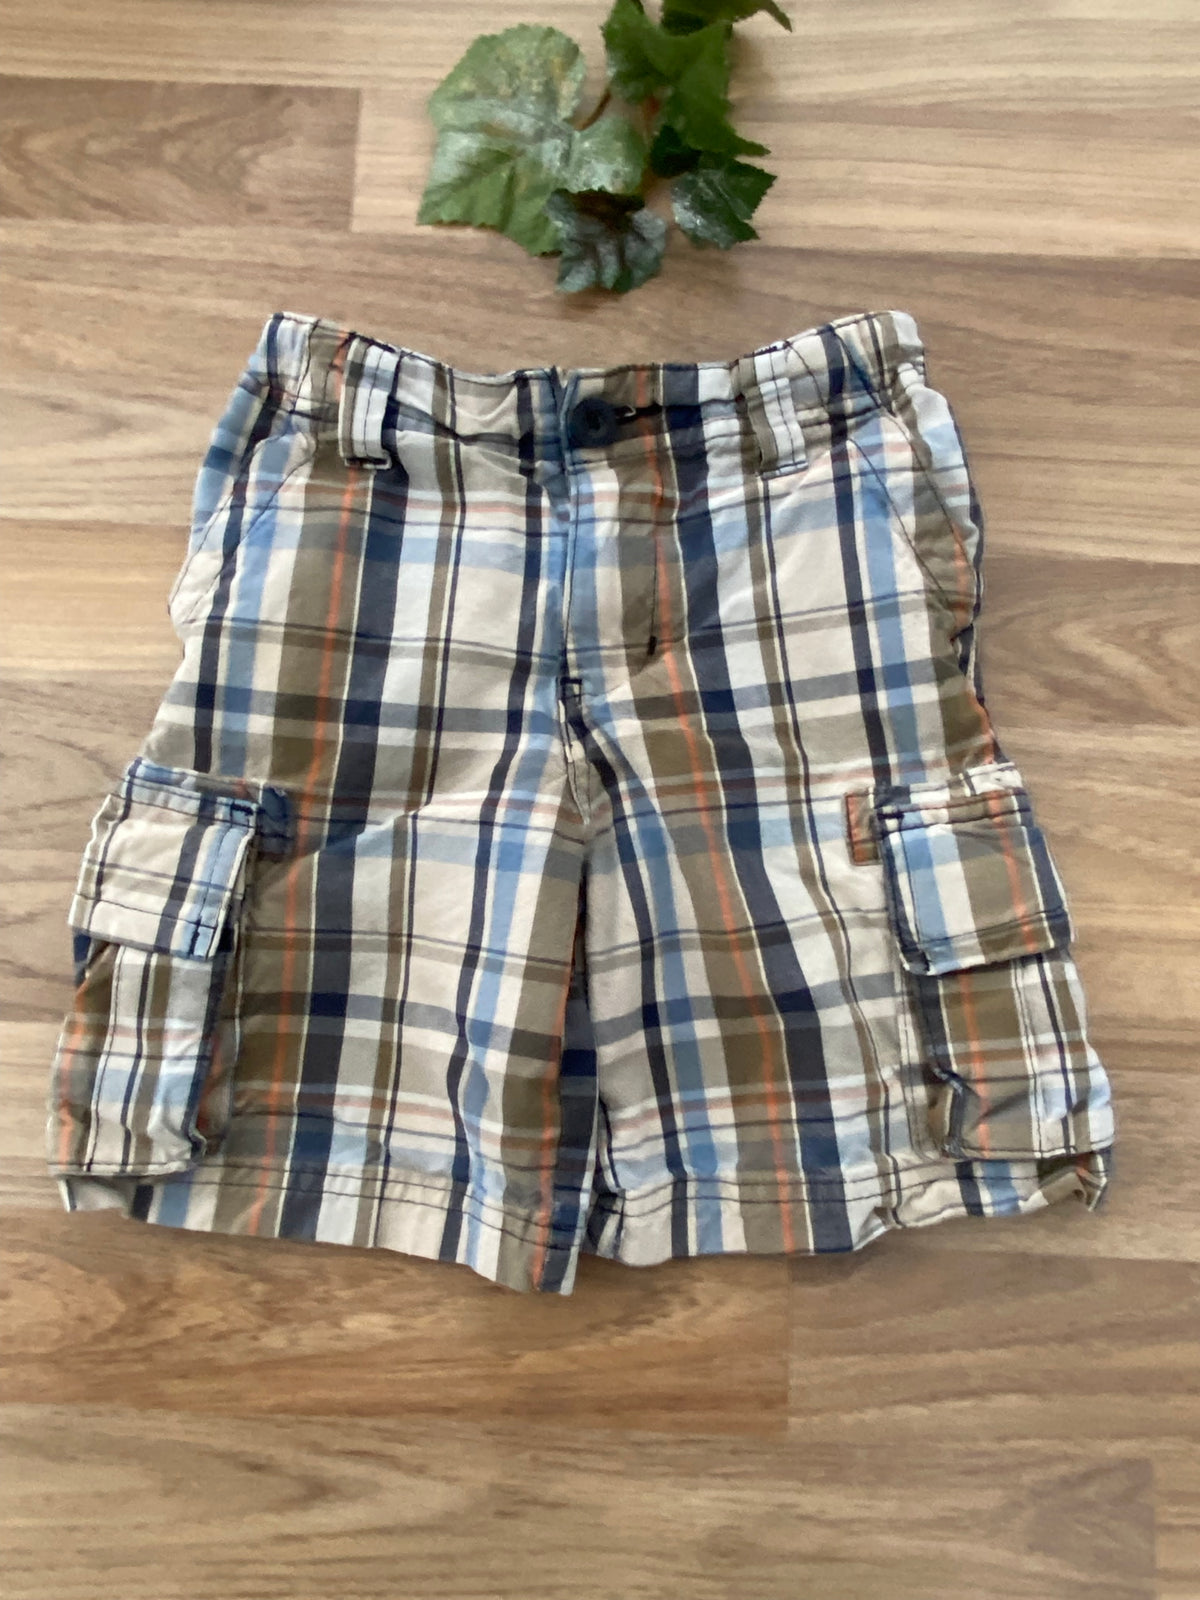 Shorts (Boys Size 3)